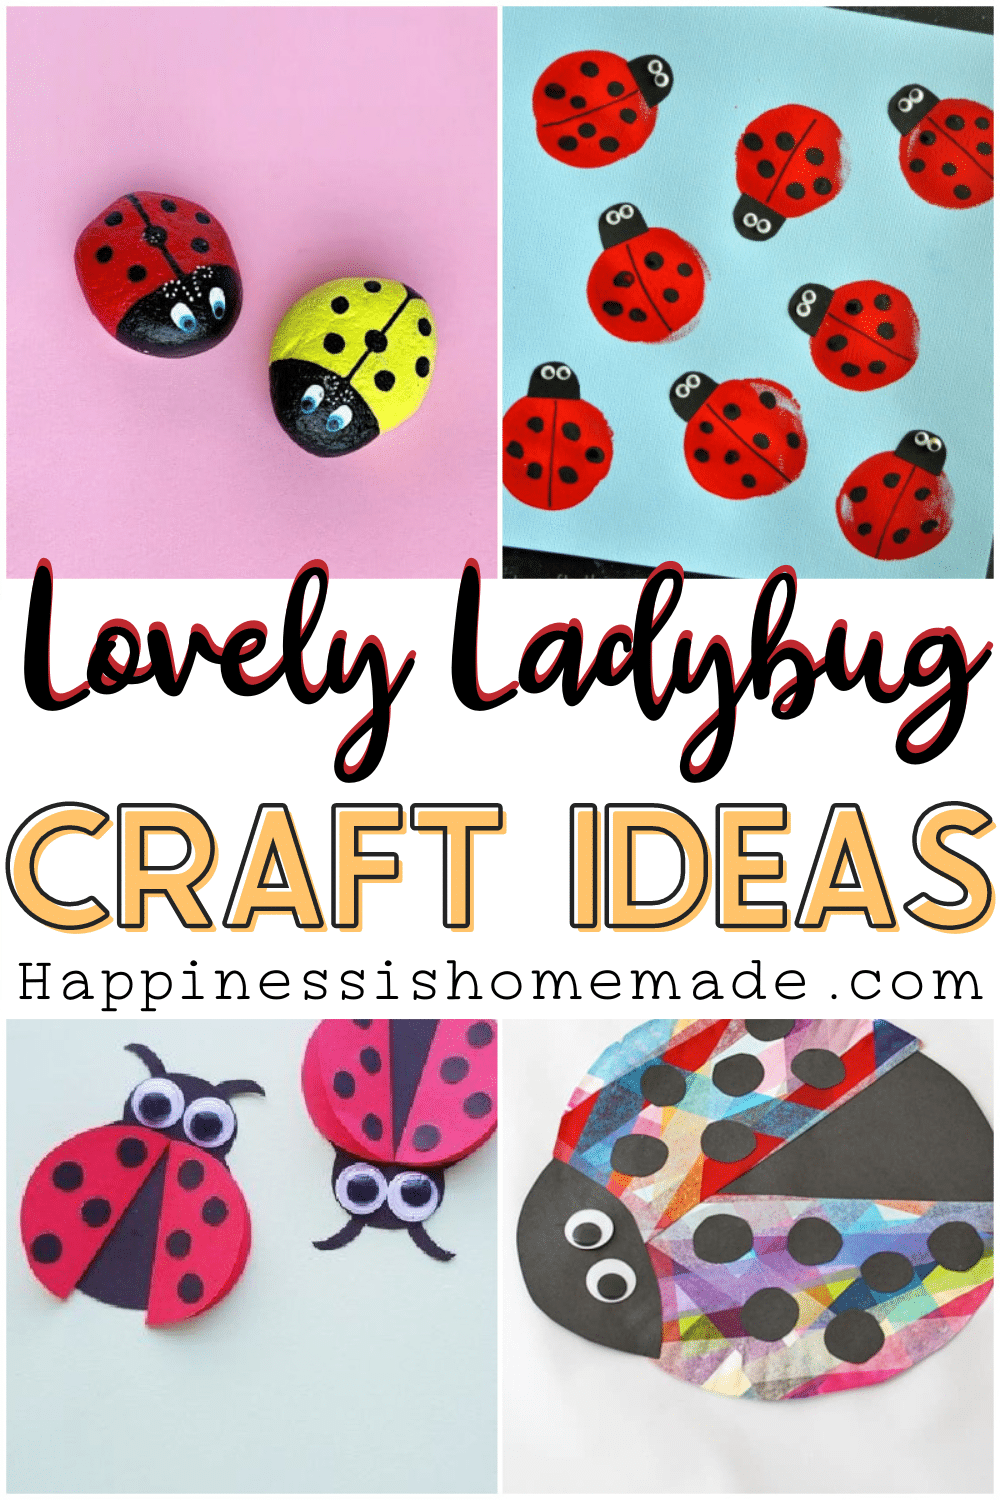 Lovely ladybug craft ideas pin graphic